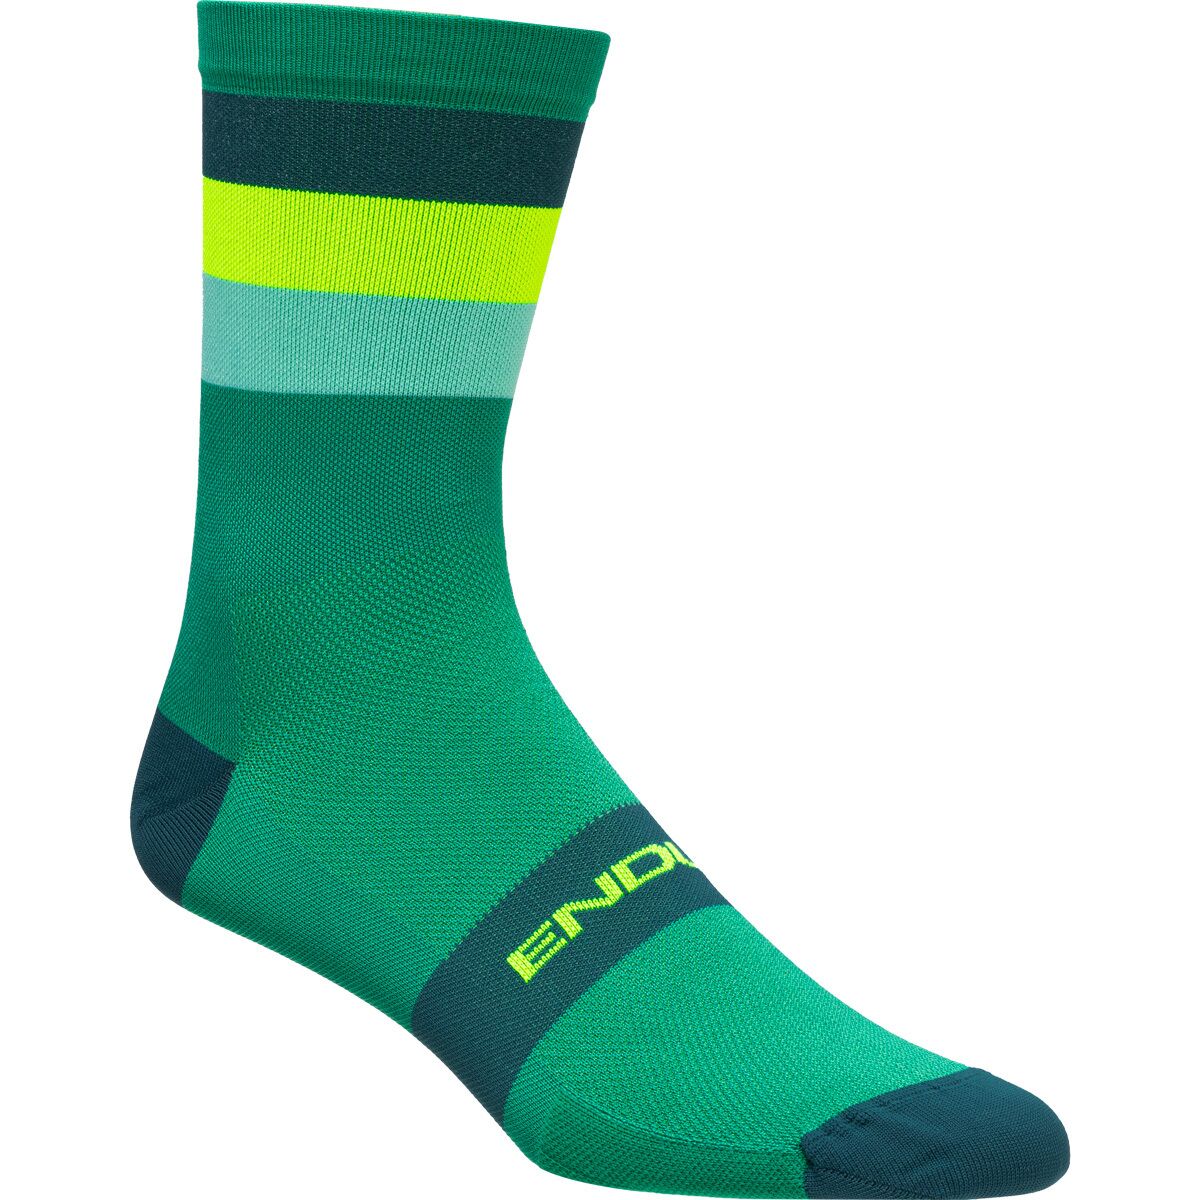 Endura Bandwidth Sock Emerald Green, S-M - Men's